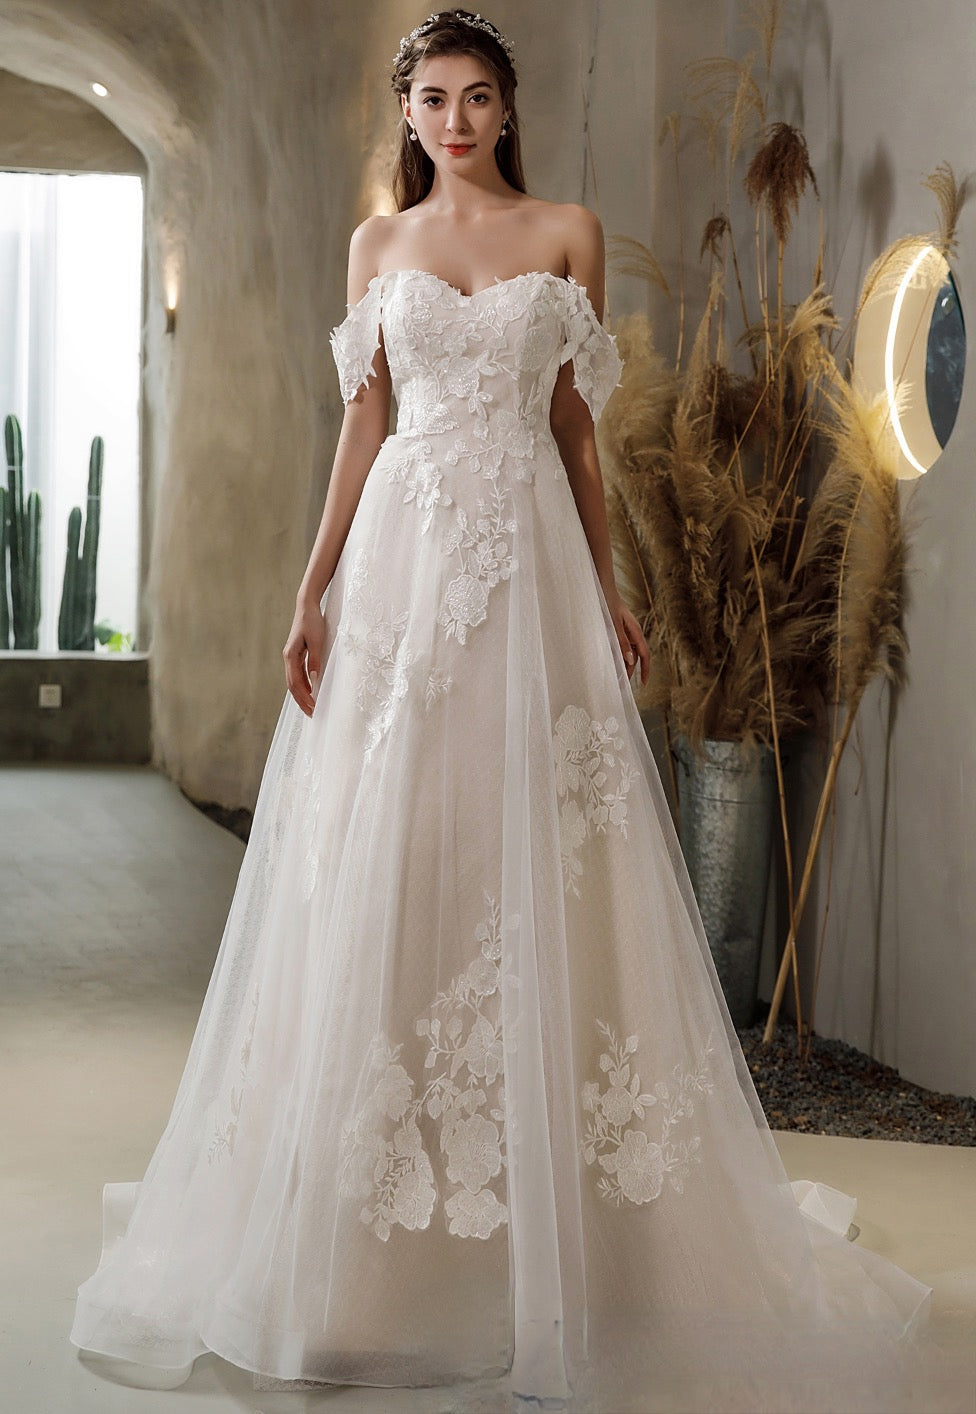 Olivia Bottega Lace Wedding Dress Elizabett Deco Wedding Dress | The Knot